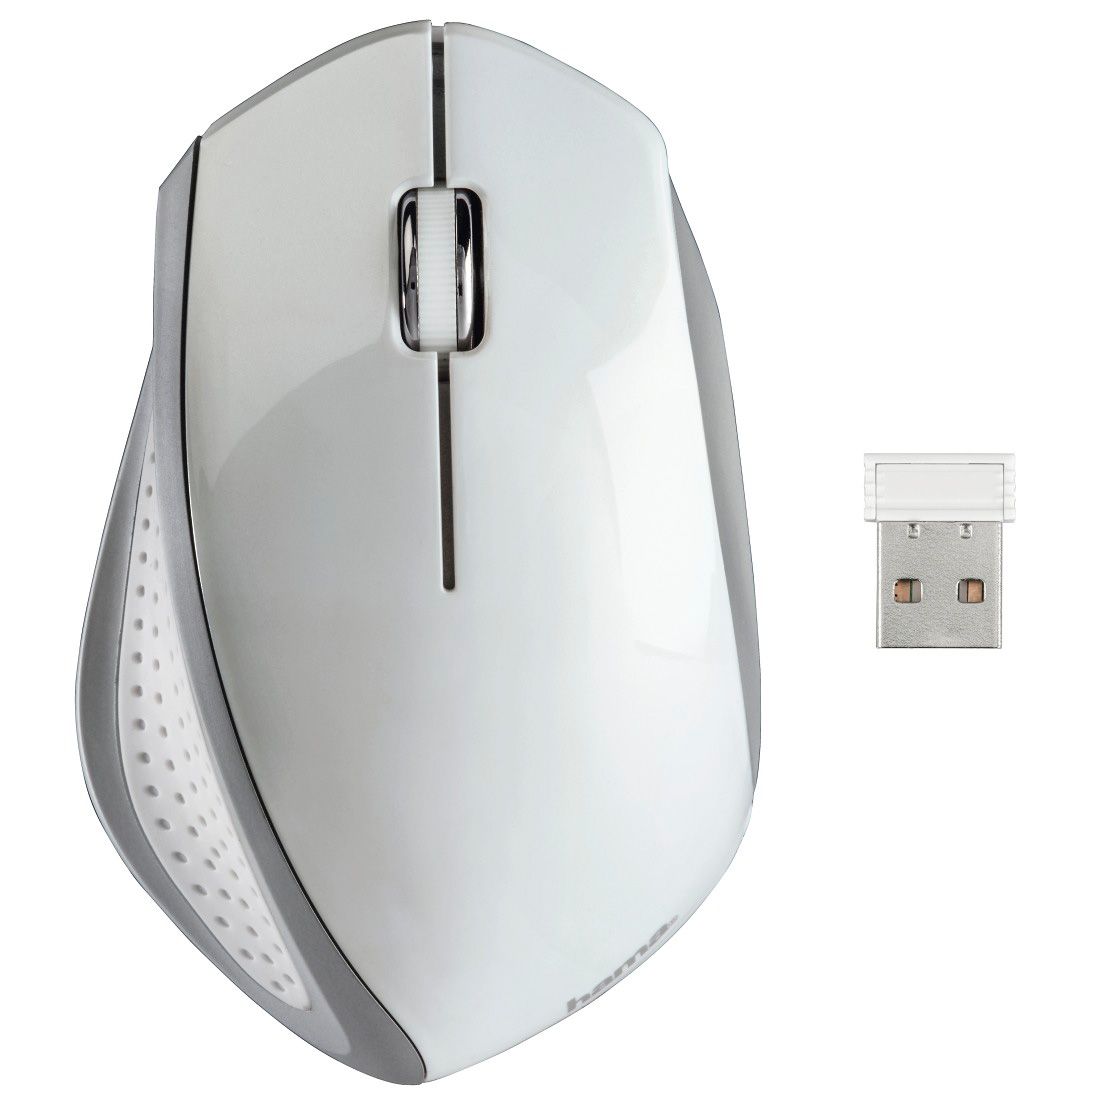  Mouse wireless Hama AM-8400 134955, Alb 